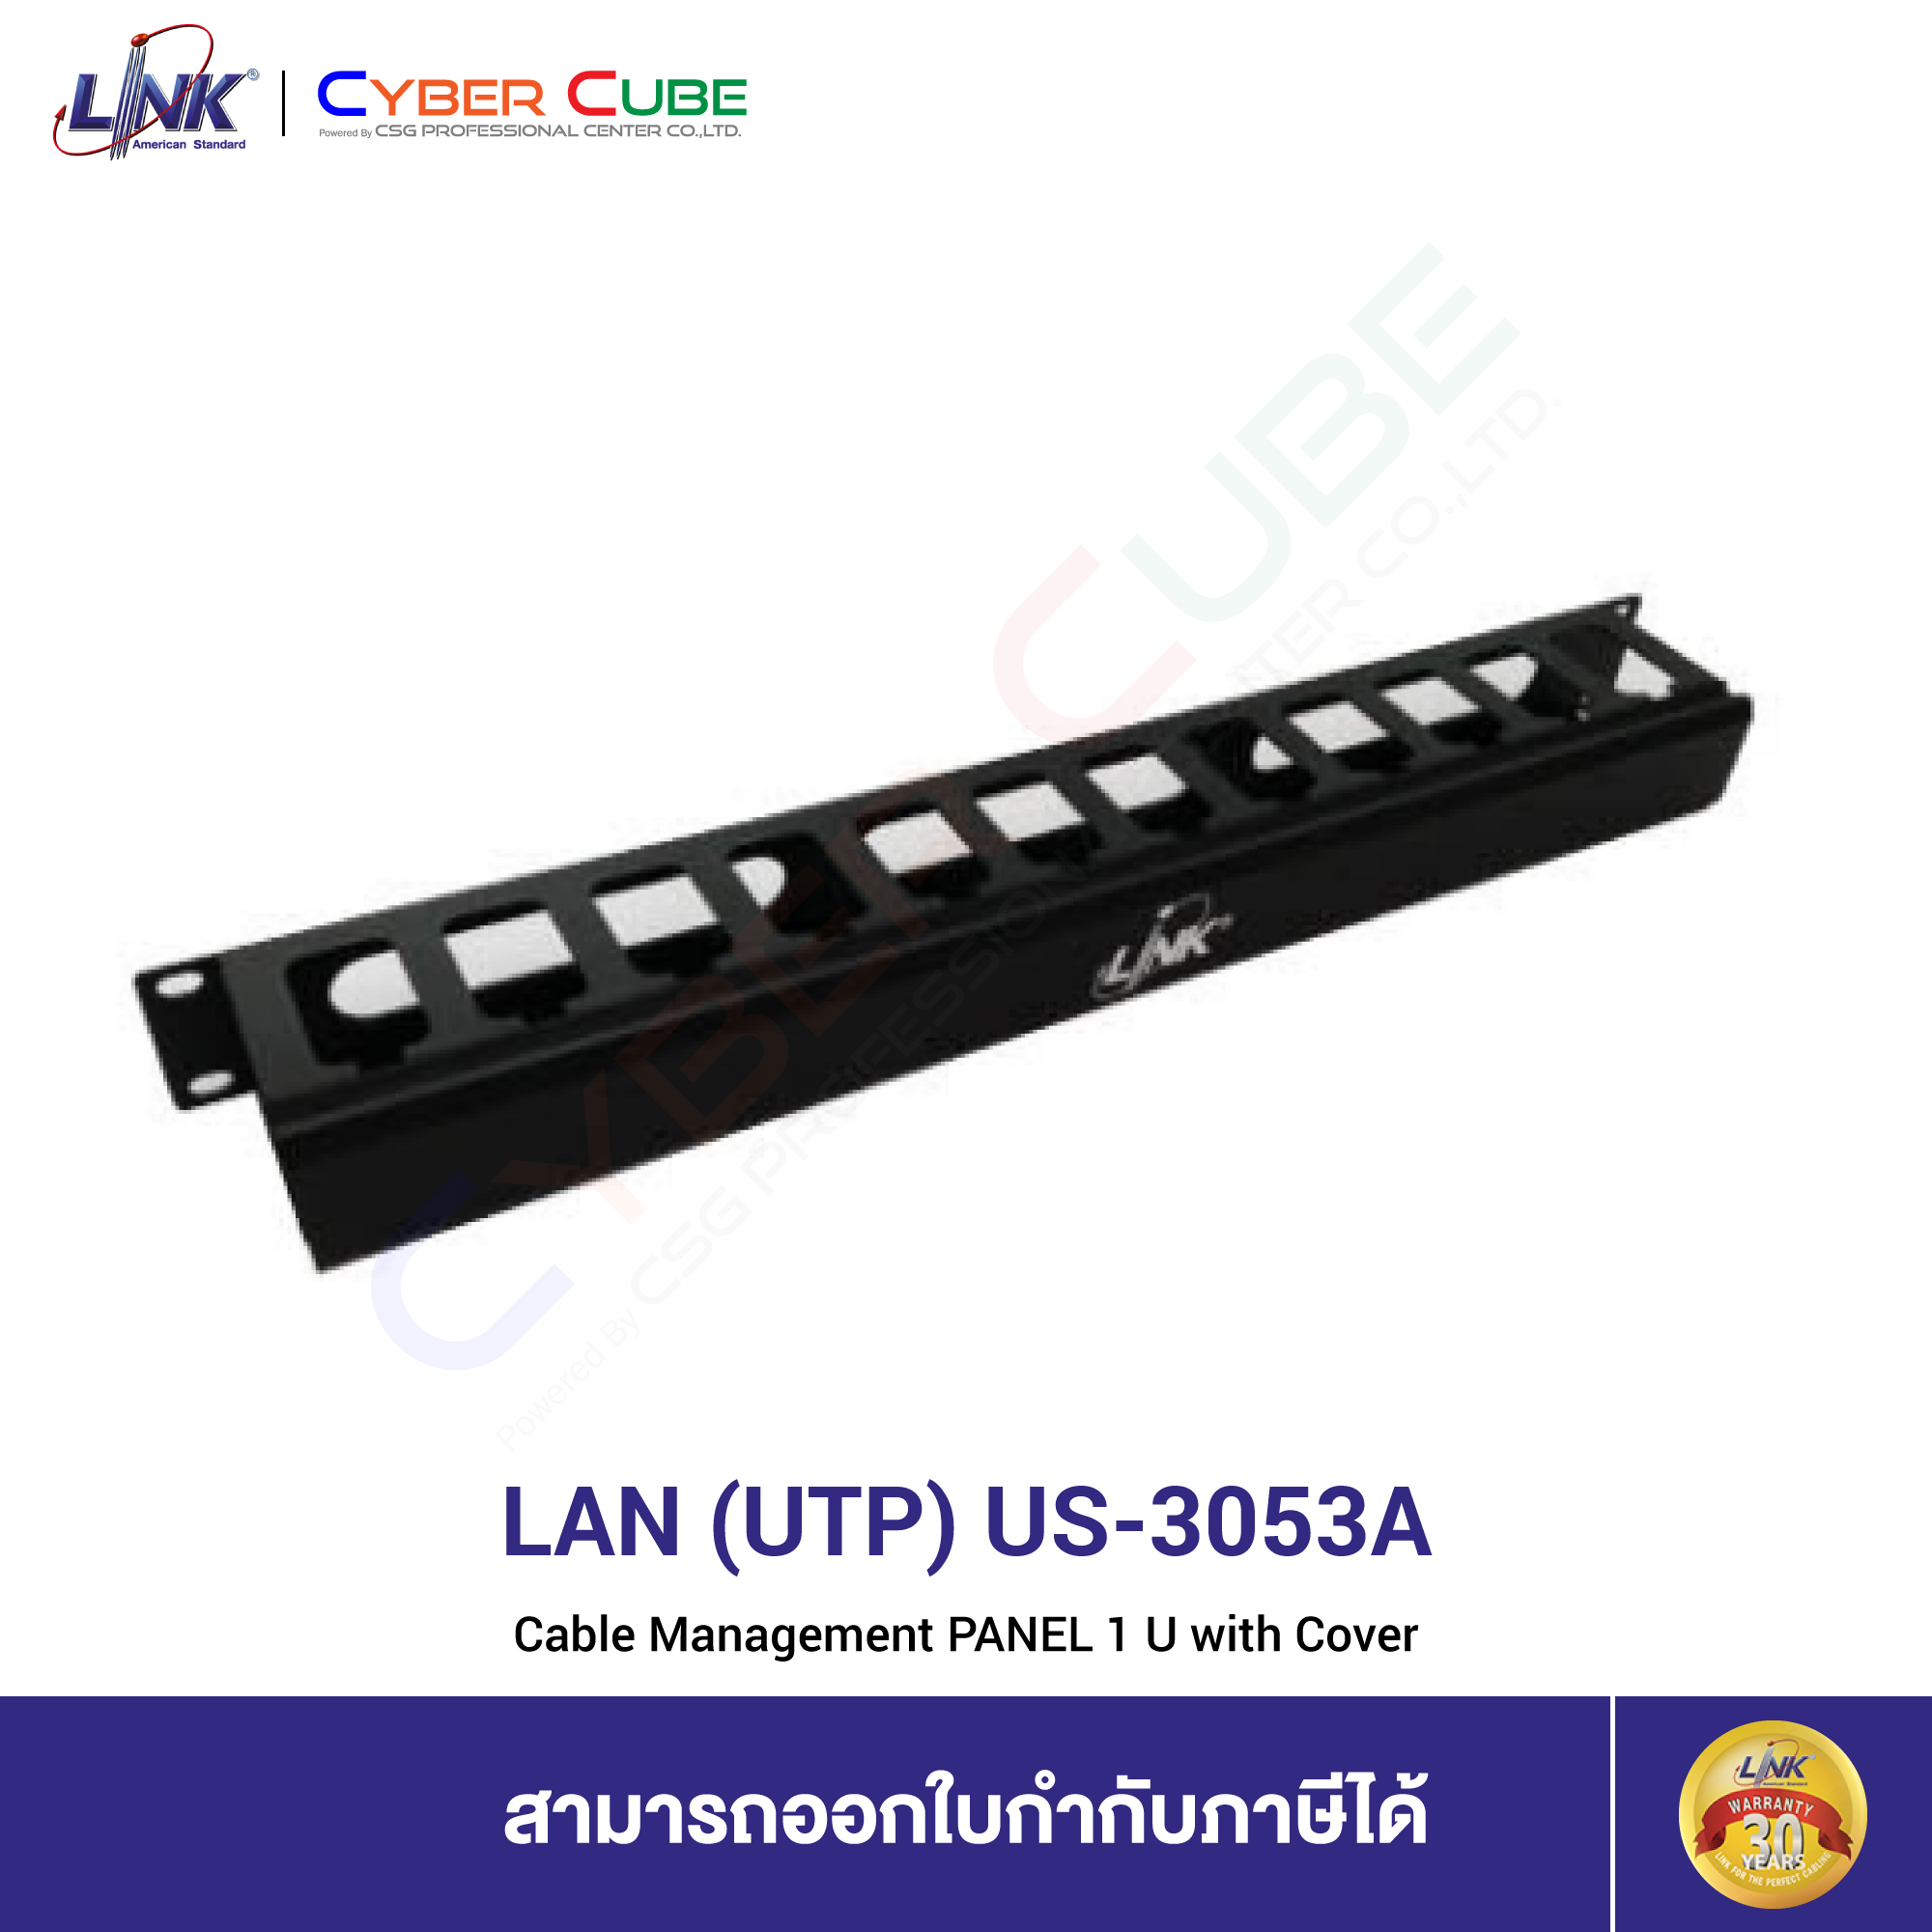 LINK US-3053A Cable Management PANEL 1 U with Cover / แผงจัดสายด้านหน้า แบบมีฝาครอบ